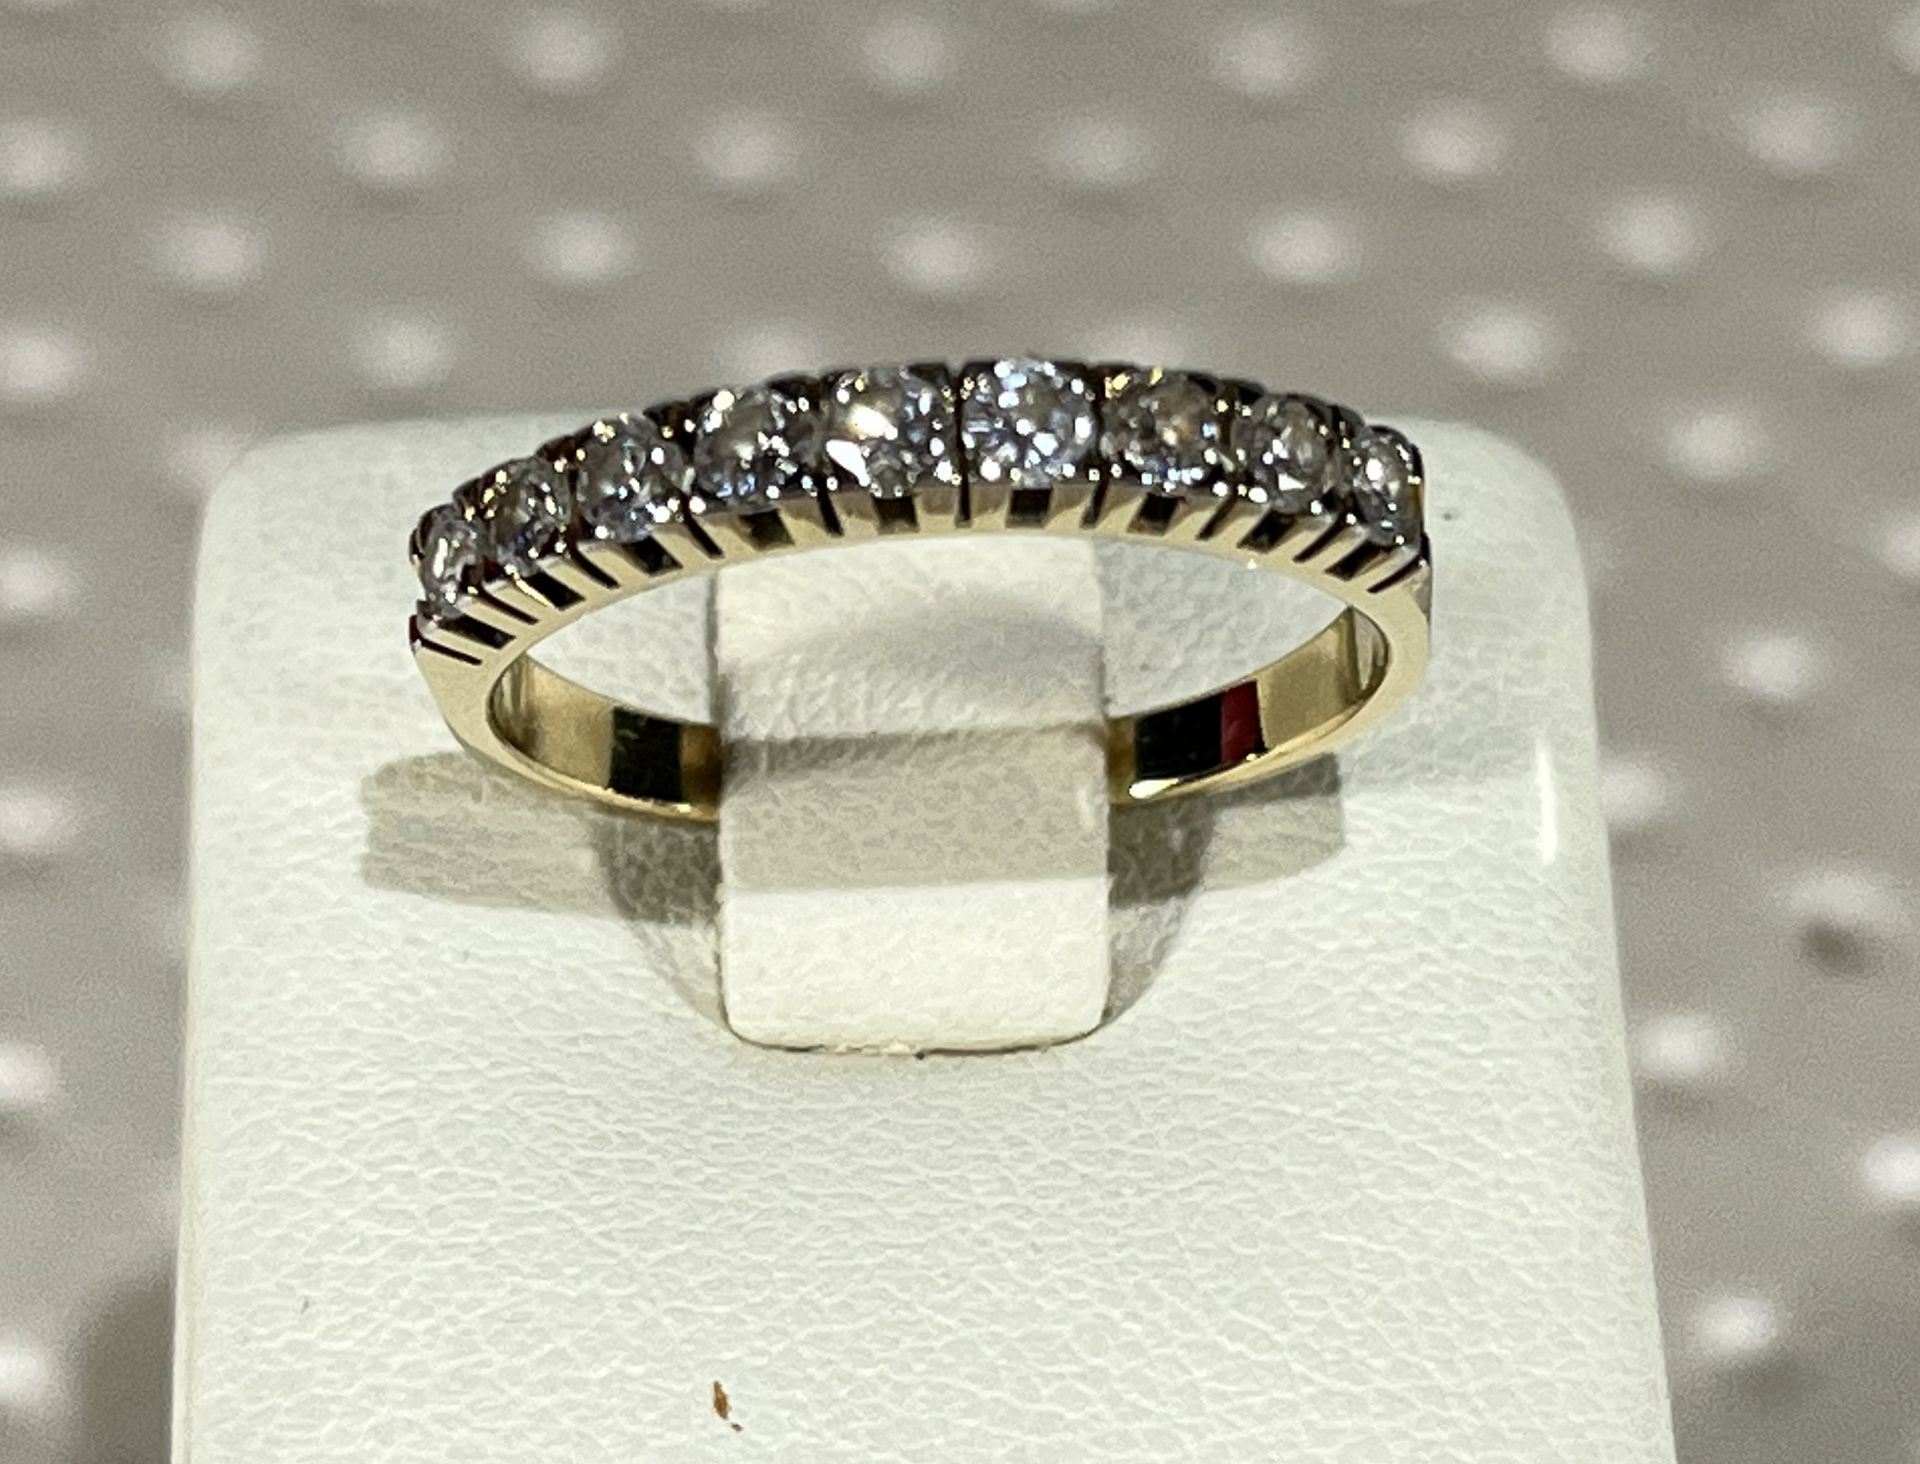 Elegant ring in 18k gold and brilliant cut diamonds - Image 2 of 4